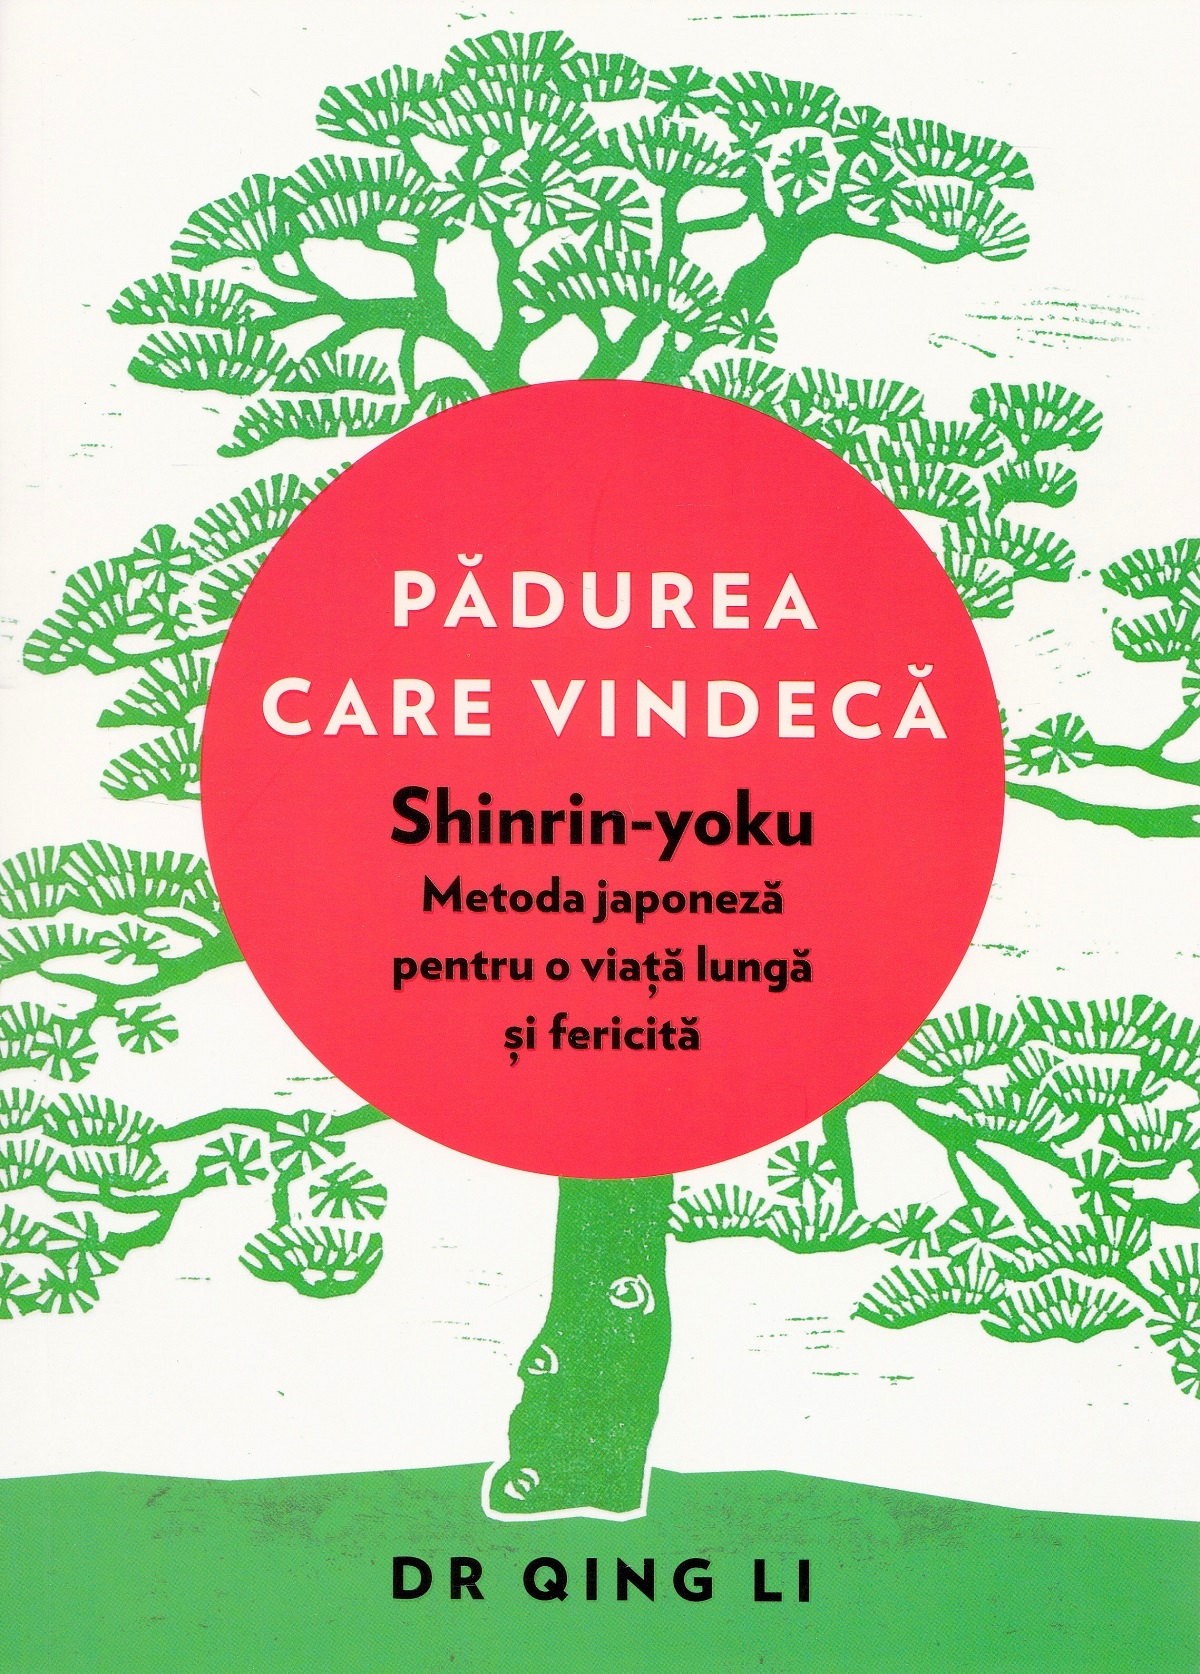 Padurea care vindeca. Shinrin-yoku: metoda japoneza pentru o viata lunga - Dr. Qing Li